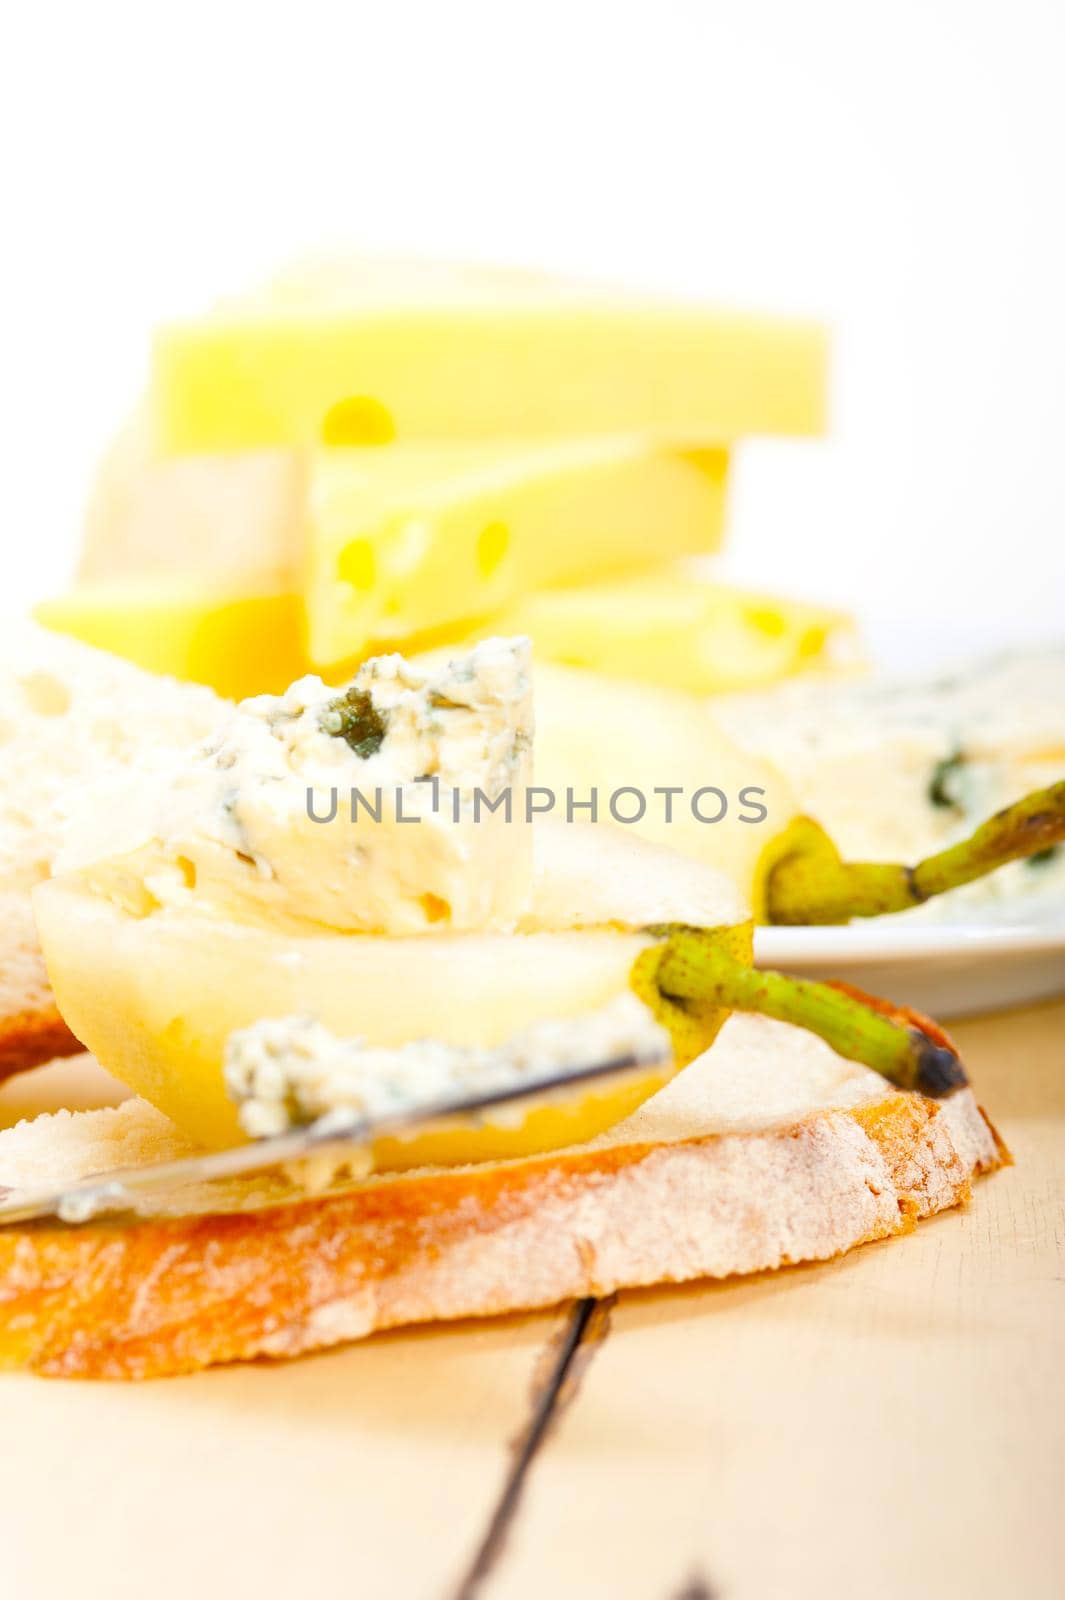 cheese and pears by keko64